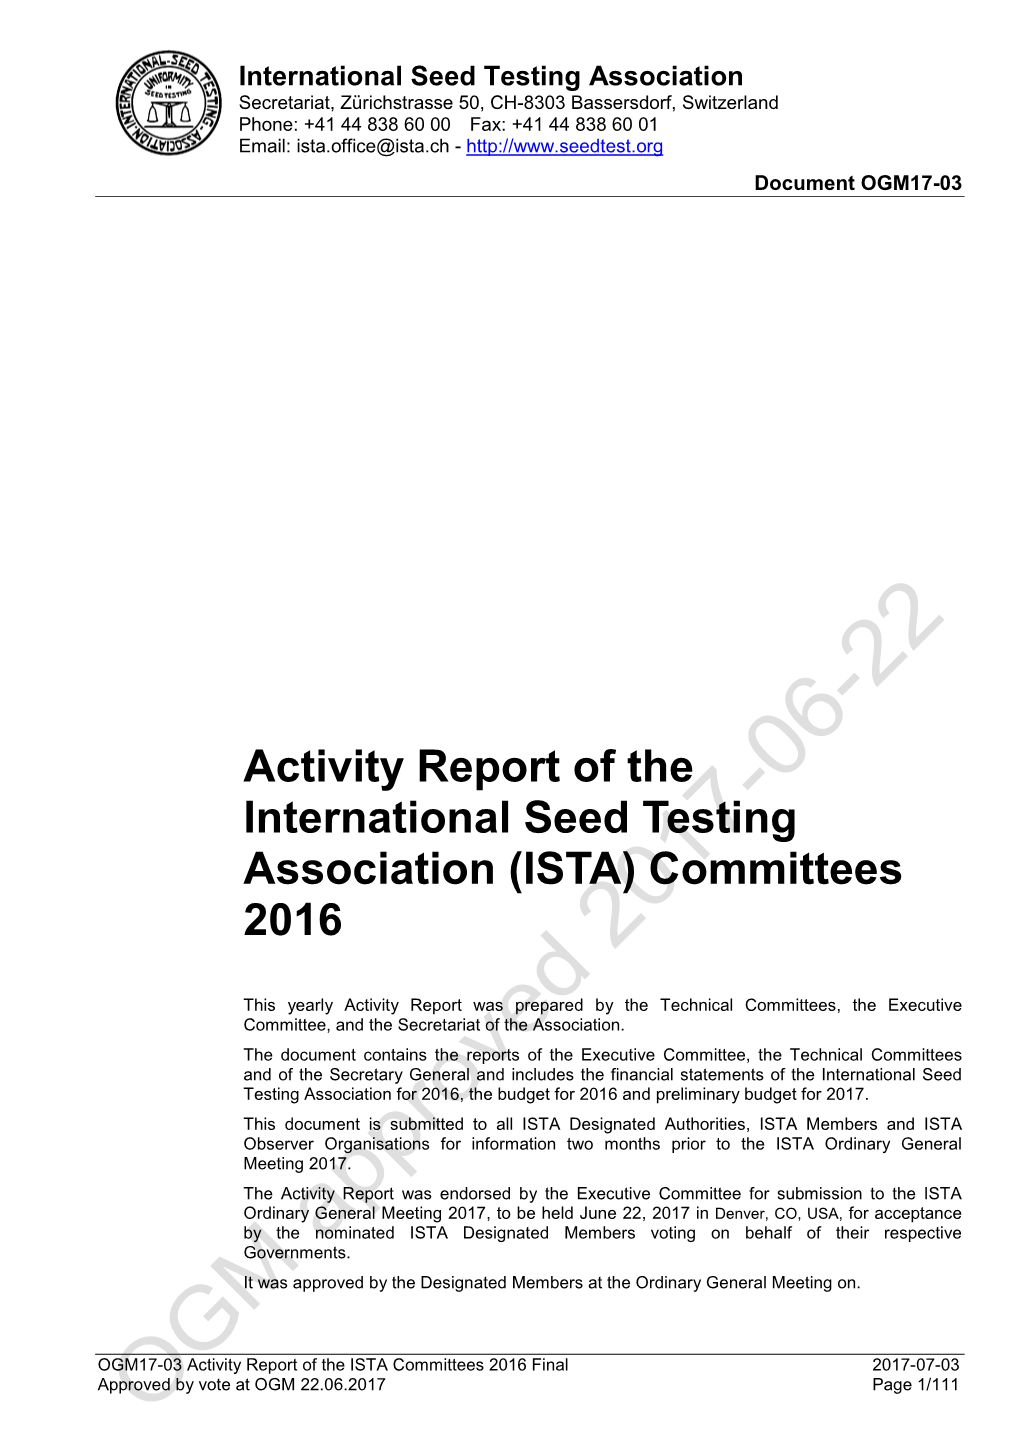 ISTA Activity Report 2016